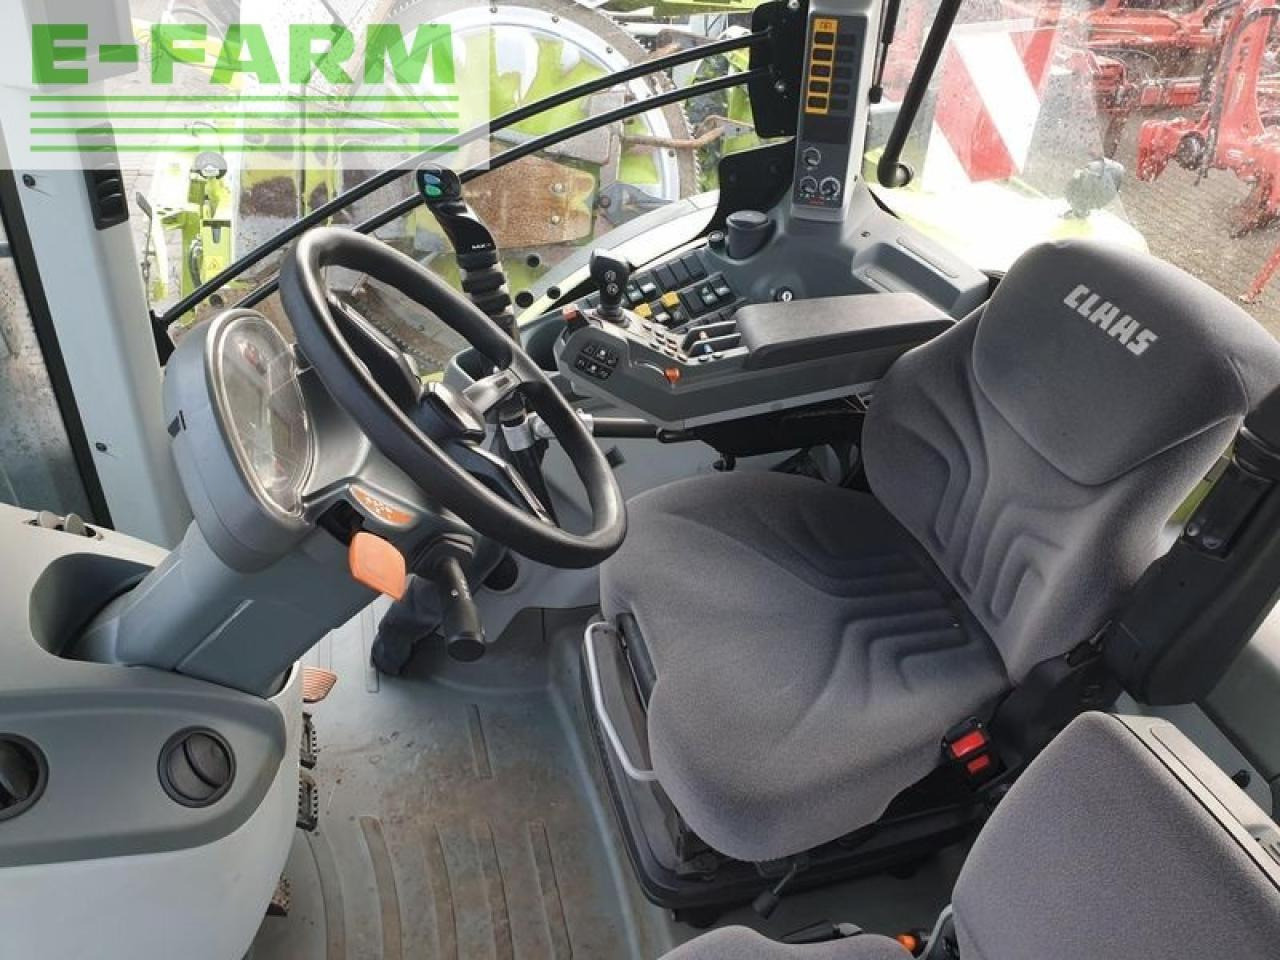 Farm tractor CLAAS arion 650 cis + mit fl mx u414